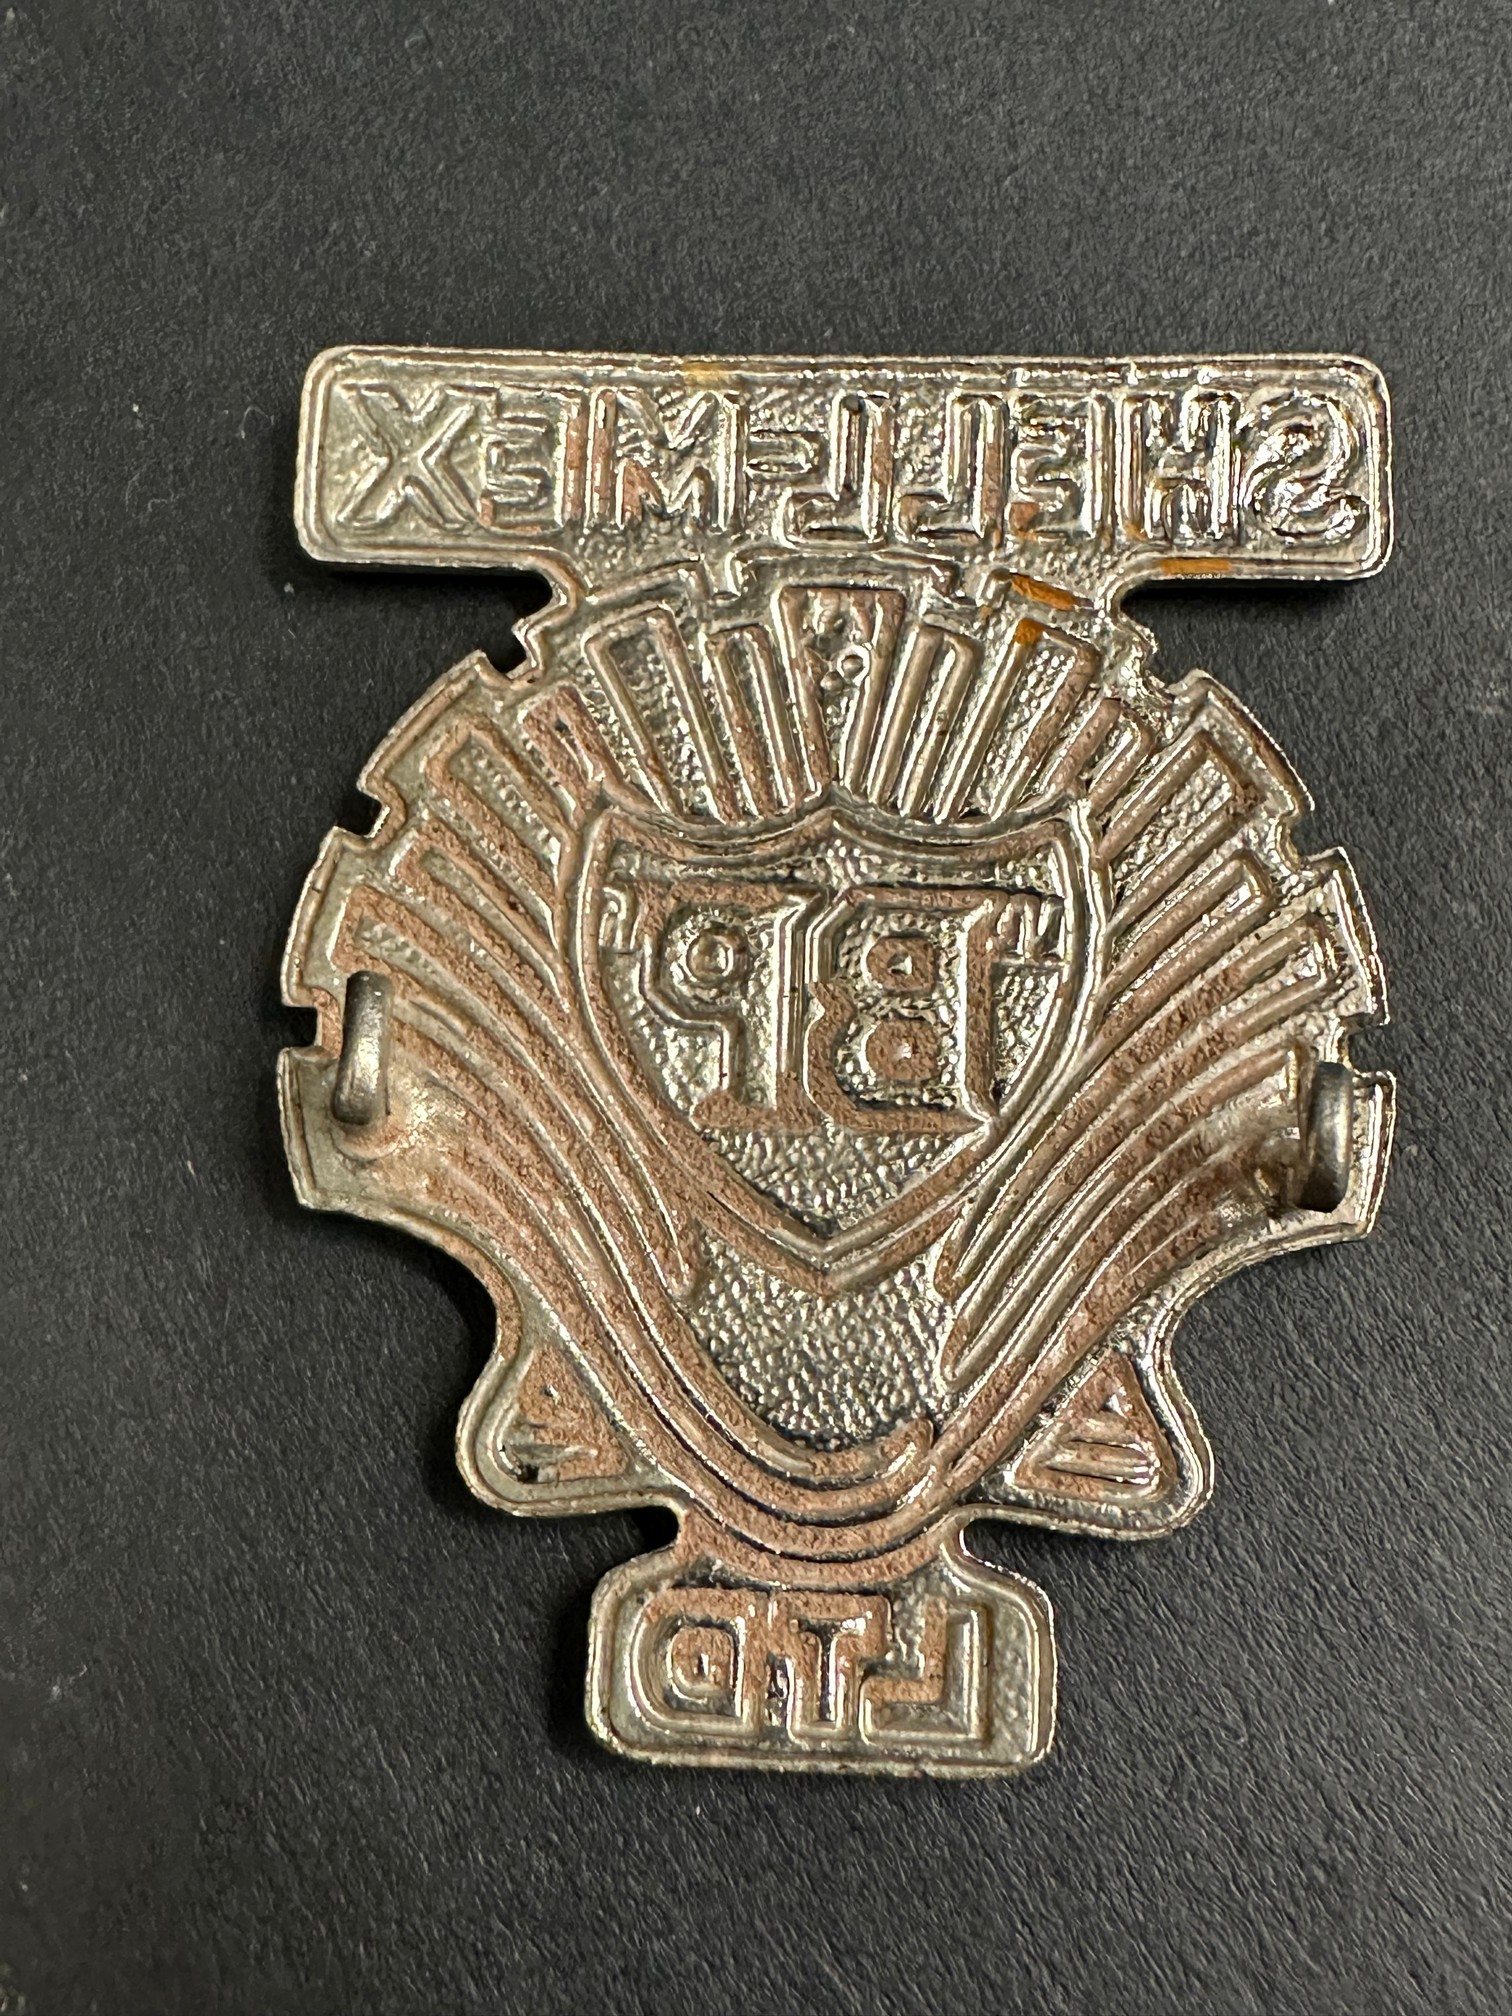 A Shell-Mex & BP Ltd part enamel cap badge. - Image 2 of 2